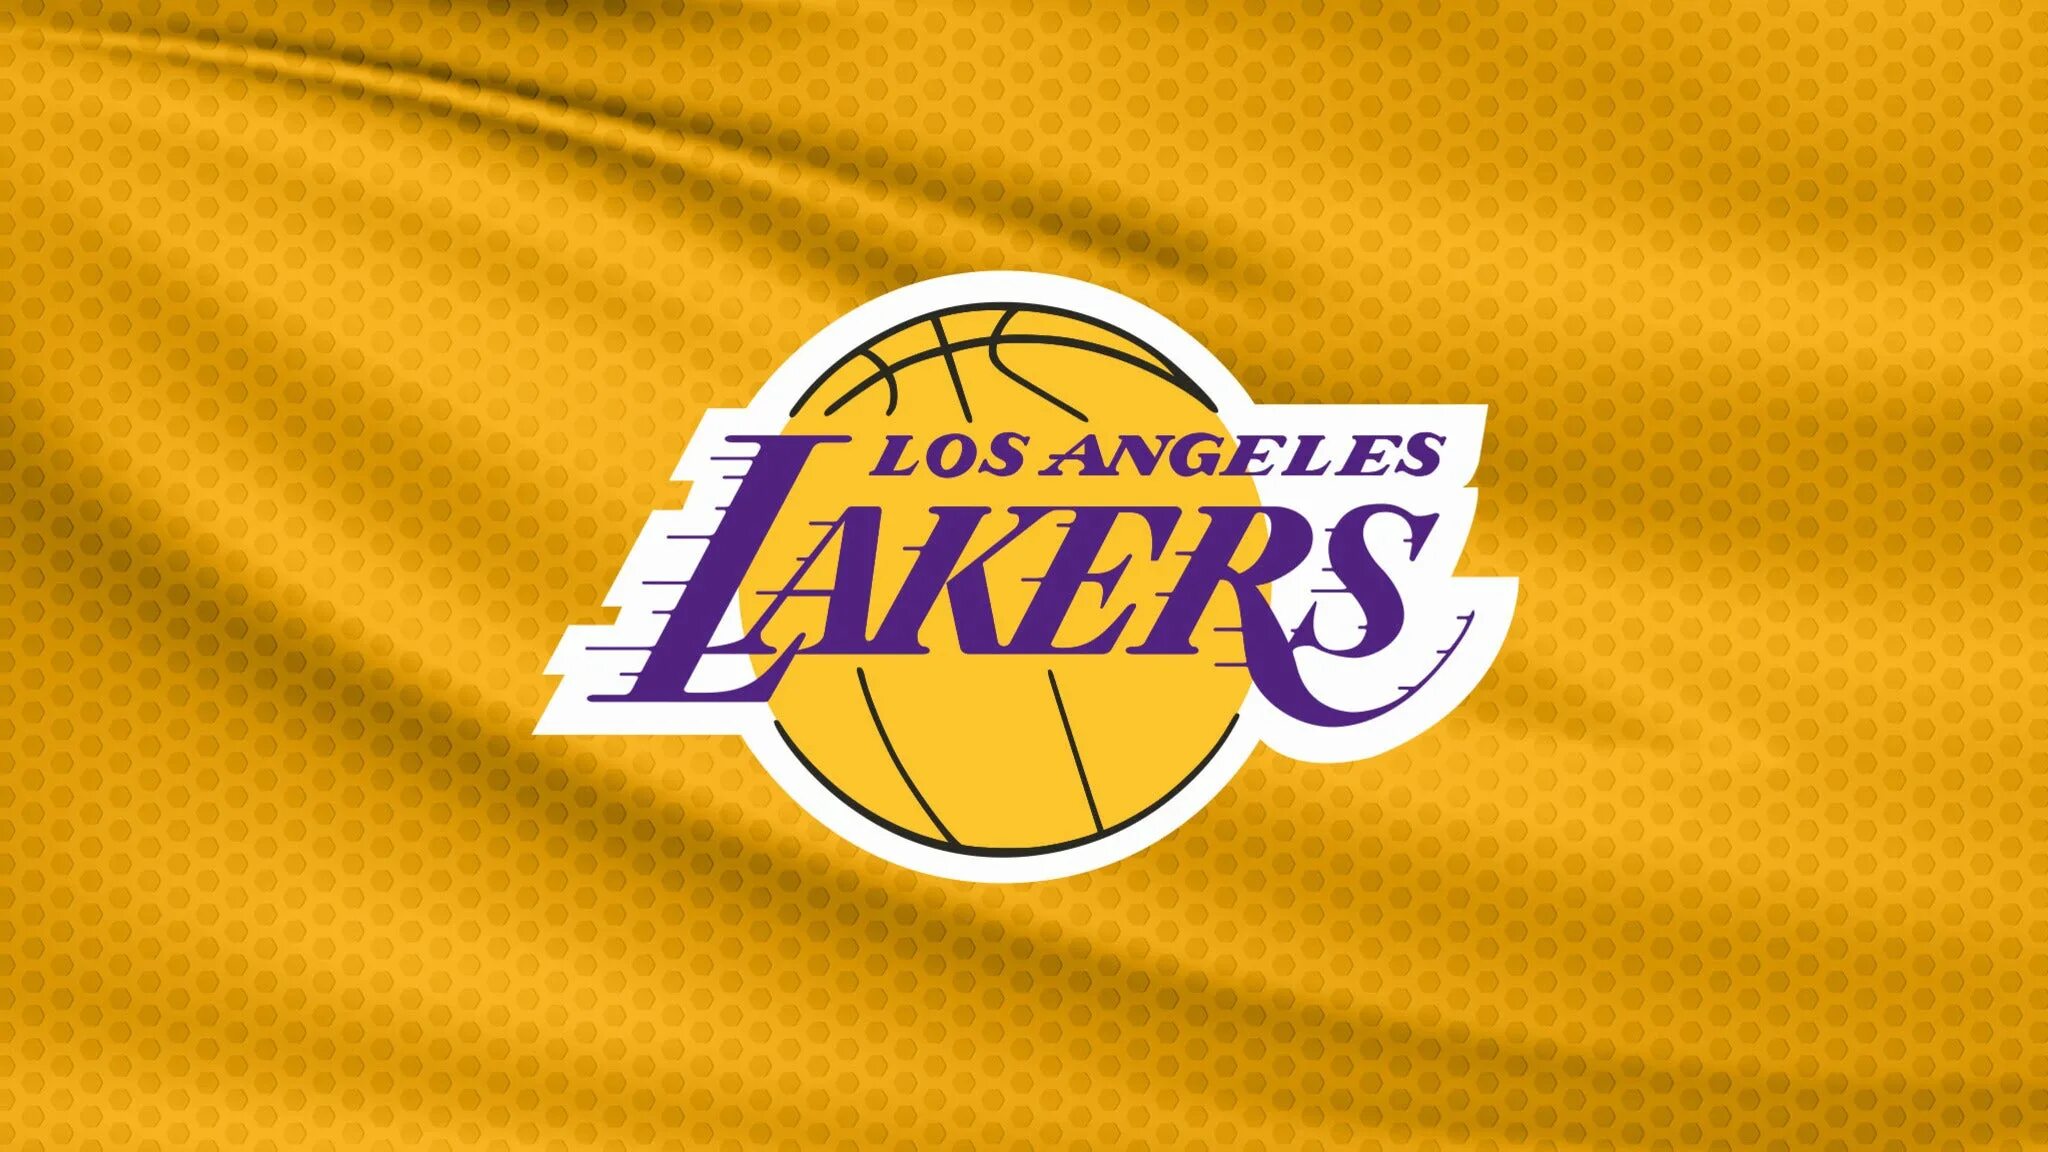 La lakers. Лос-Анджелес Лейкерс логотип. Баскетбольный клуб Лос-Анджелес Лейкерс. Команда Лос Анджелес Лейкерс. Лос Анджелес Лейкерс фото.